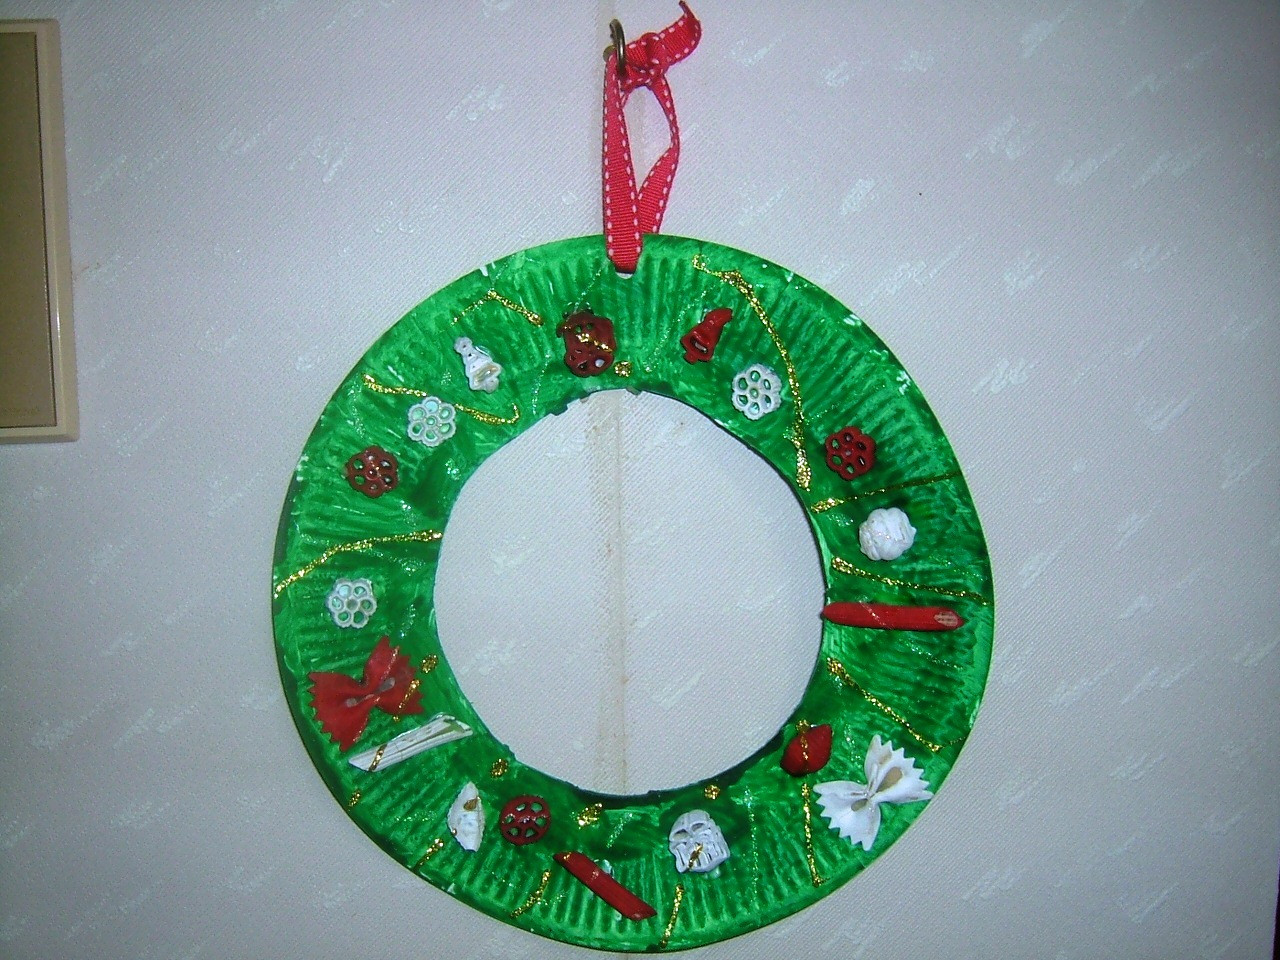 Best ideas about Preschool Christmas Craft Ideas
. Save or Pin Easy Christmas craft ideas for kids Now.